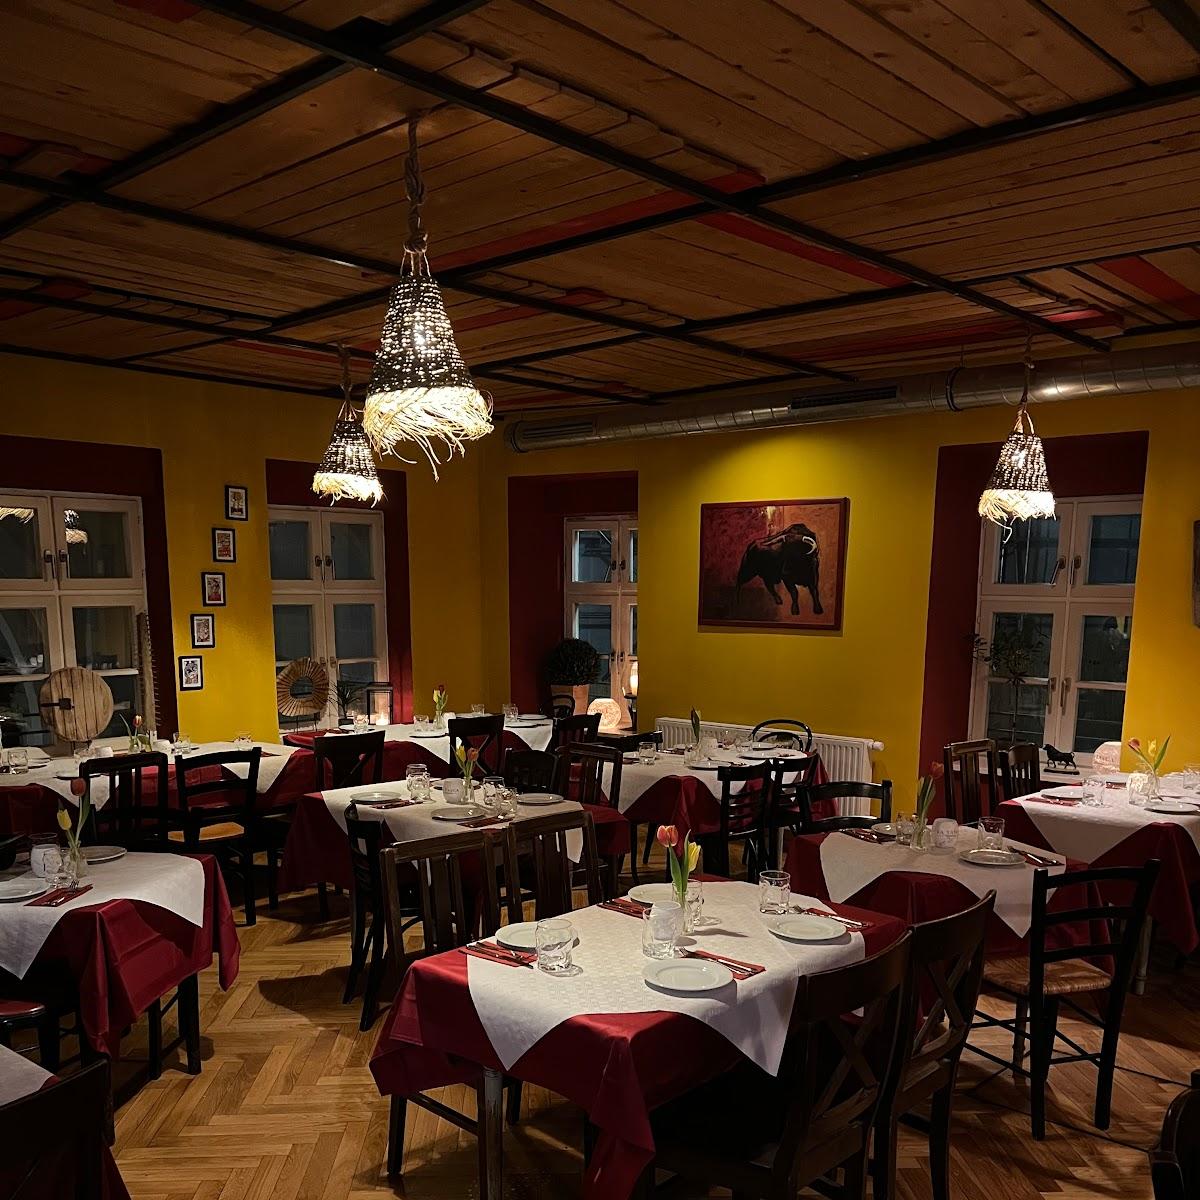 Restaurant "La Tasca Flamenca" in Freising